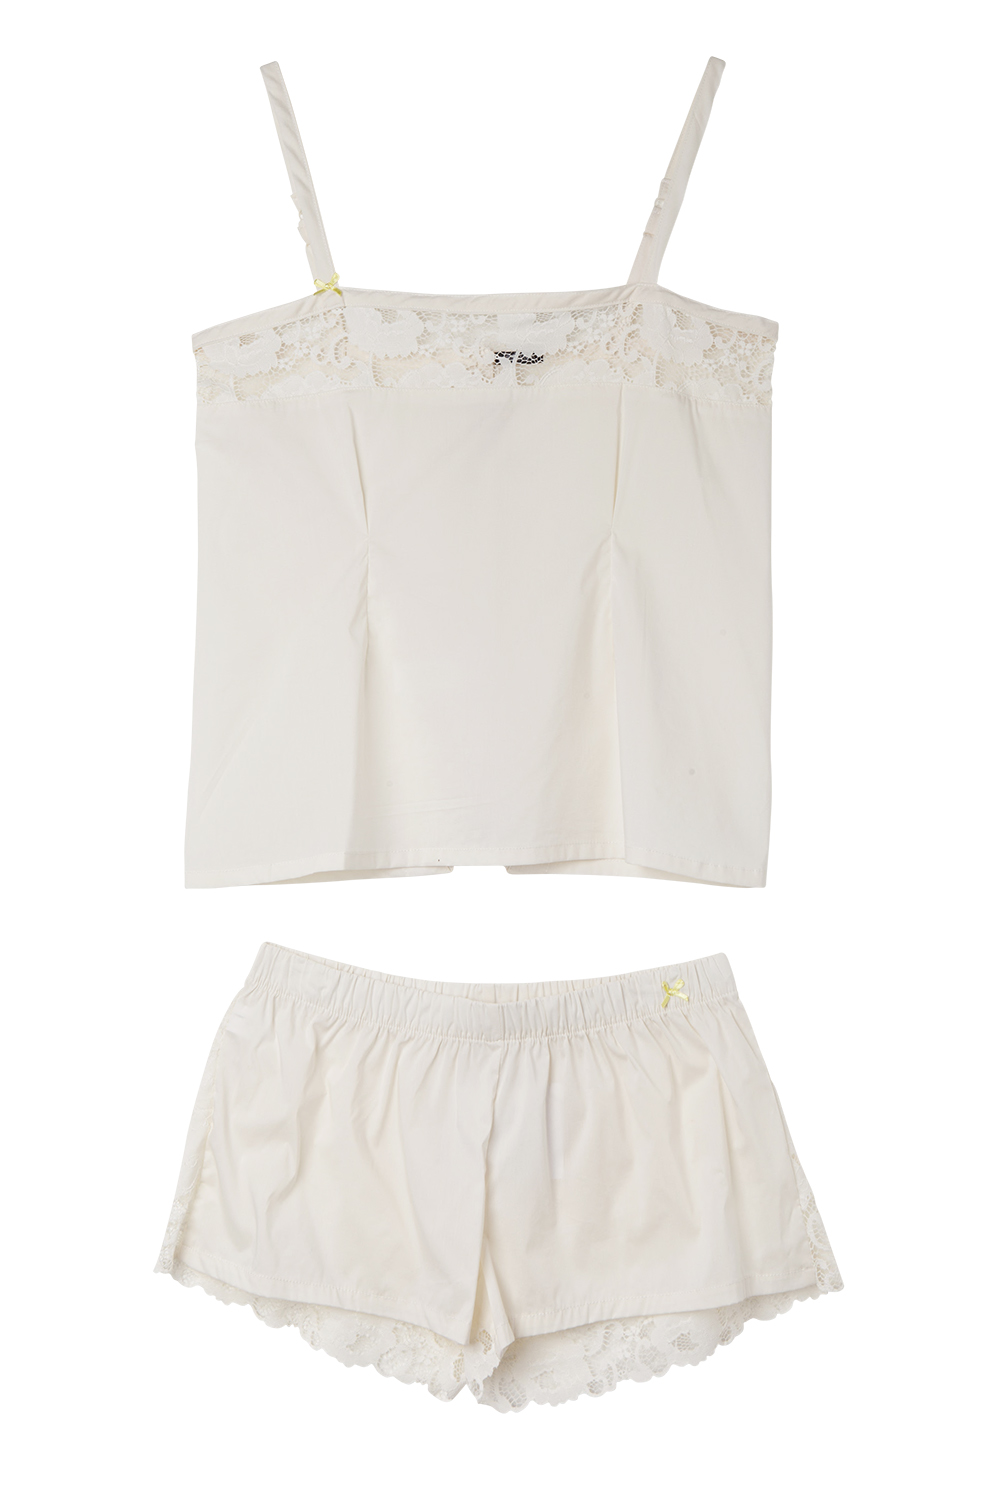 Camisole, $50, and shorts, $70, by Heidi Klum Intimates.